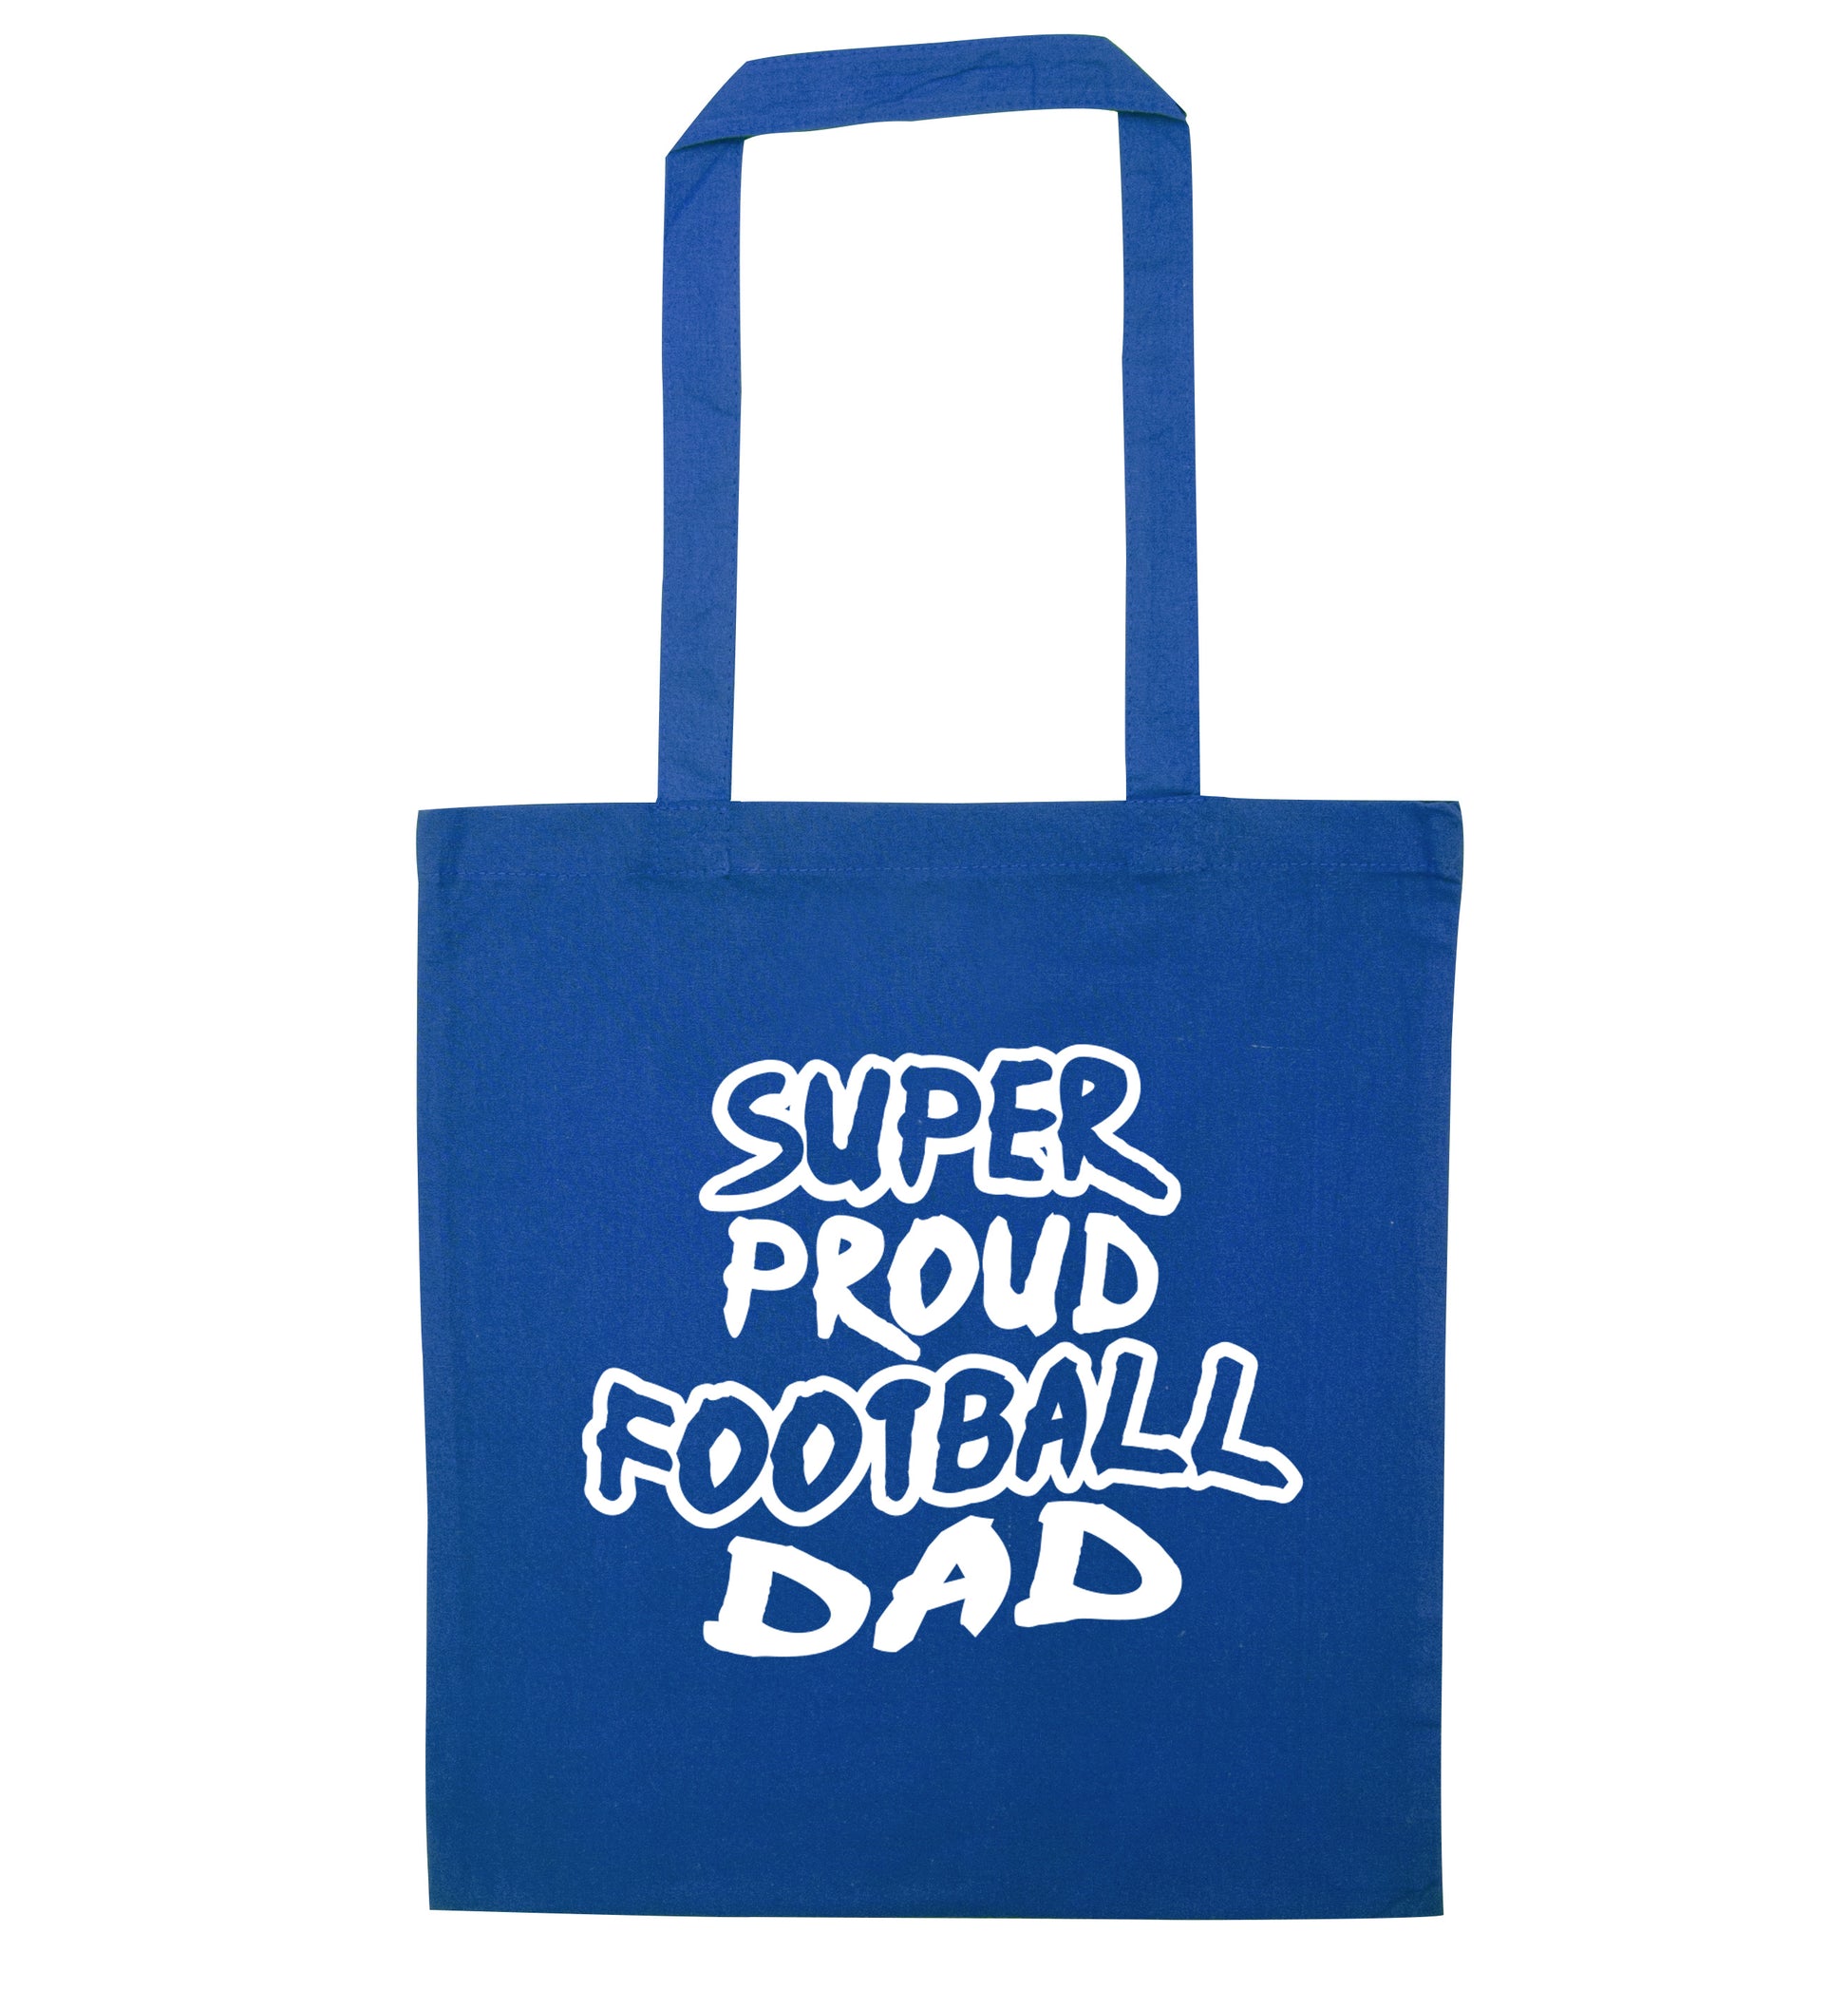 Super proud football dad blue tote bag